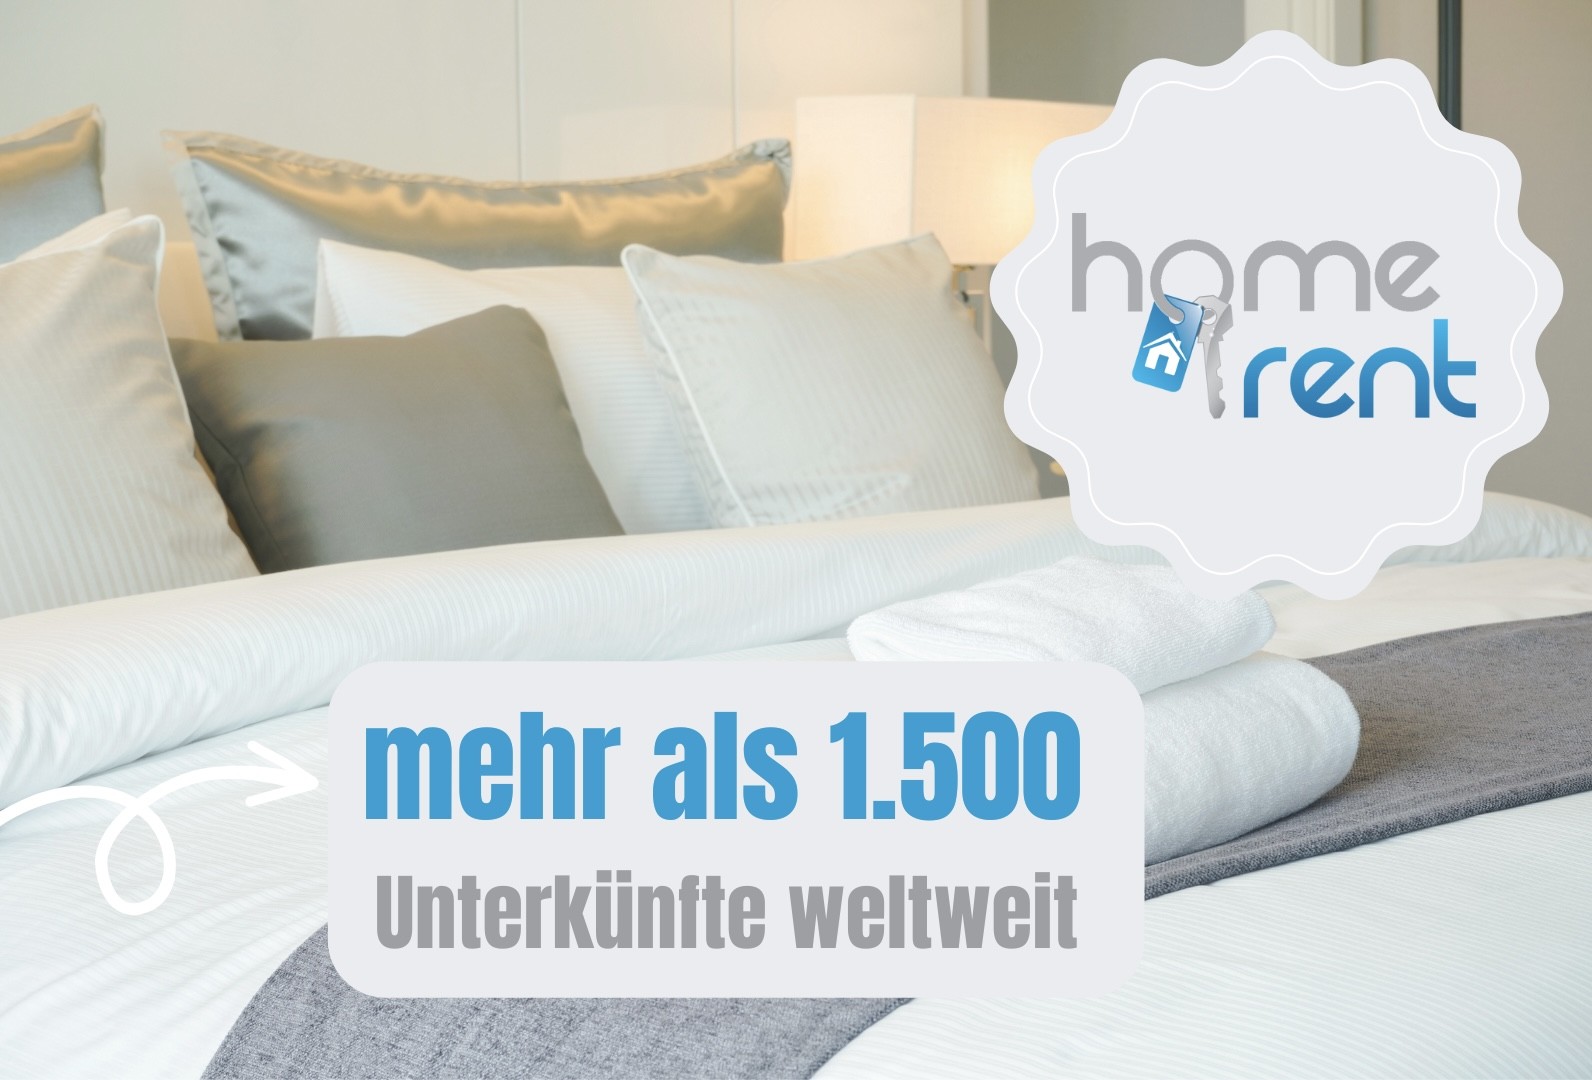 Monteurwohnung HomeRent in Solingen, Haan &amp; Umgebung  Homerent Immobilien GmbH 42719  1714127484_662b827c3a222